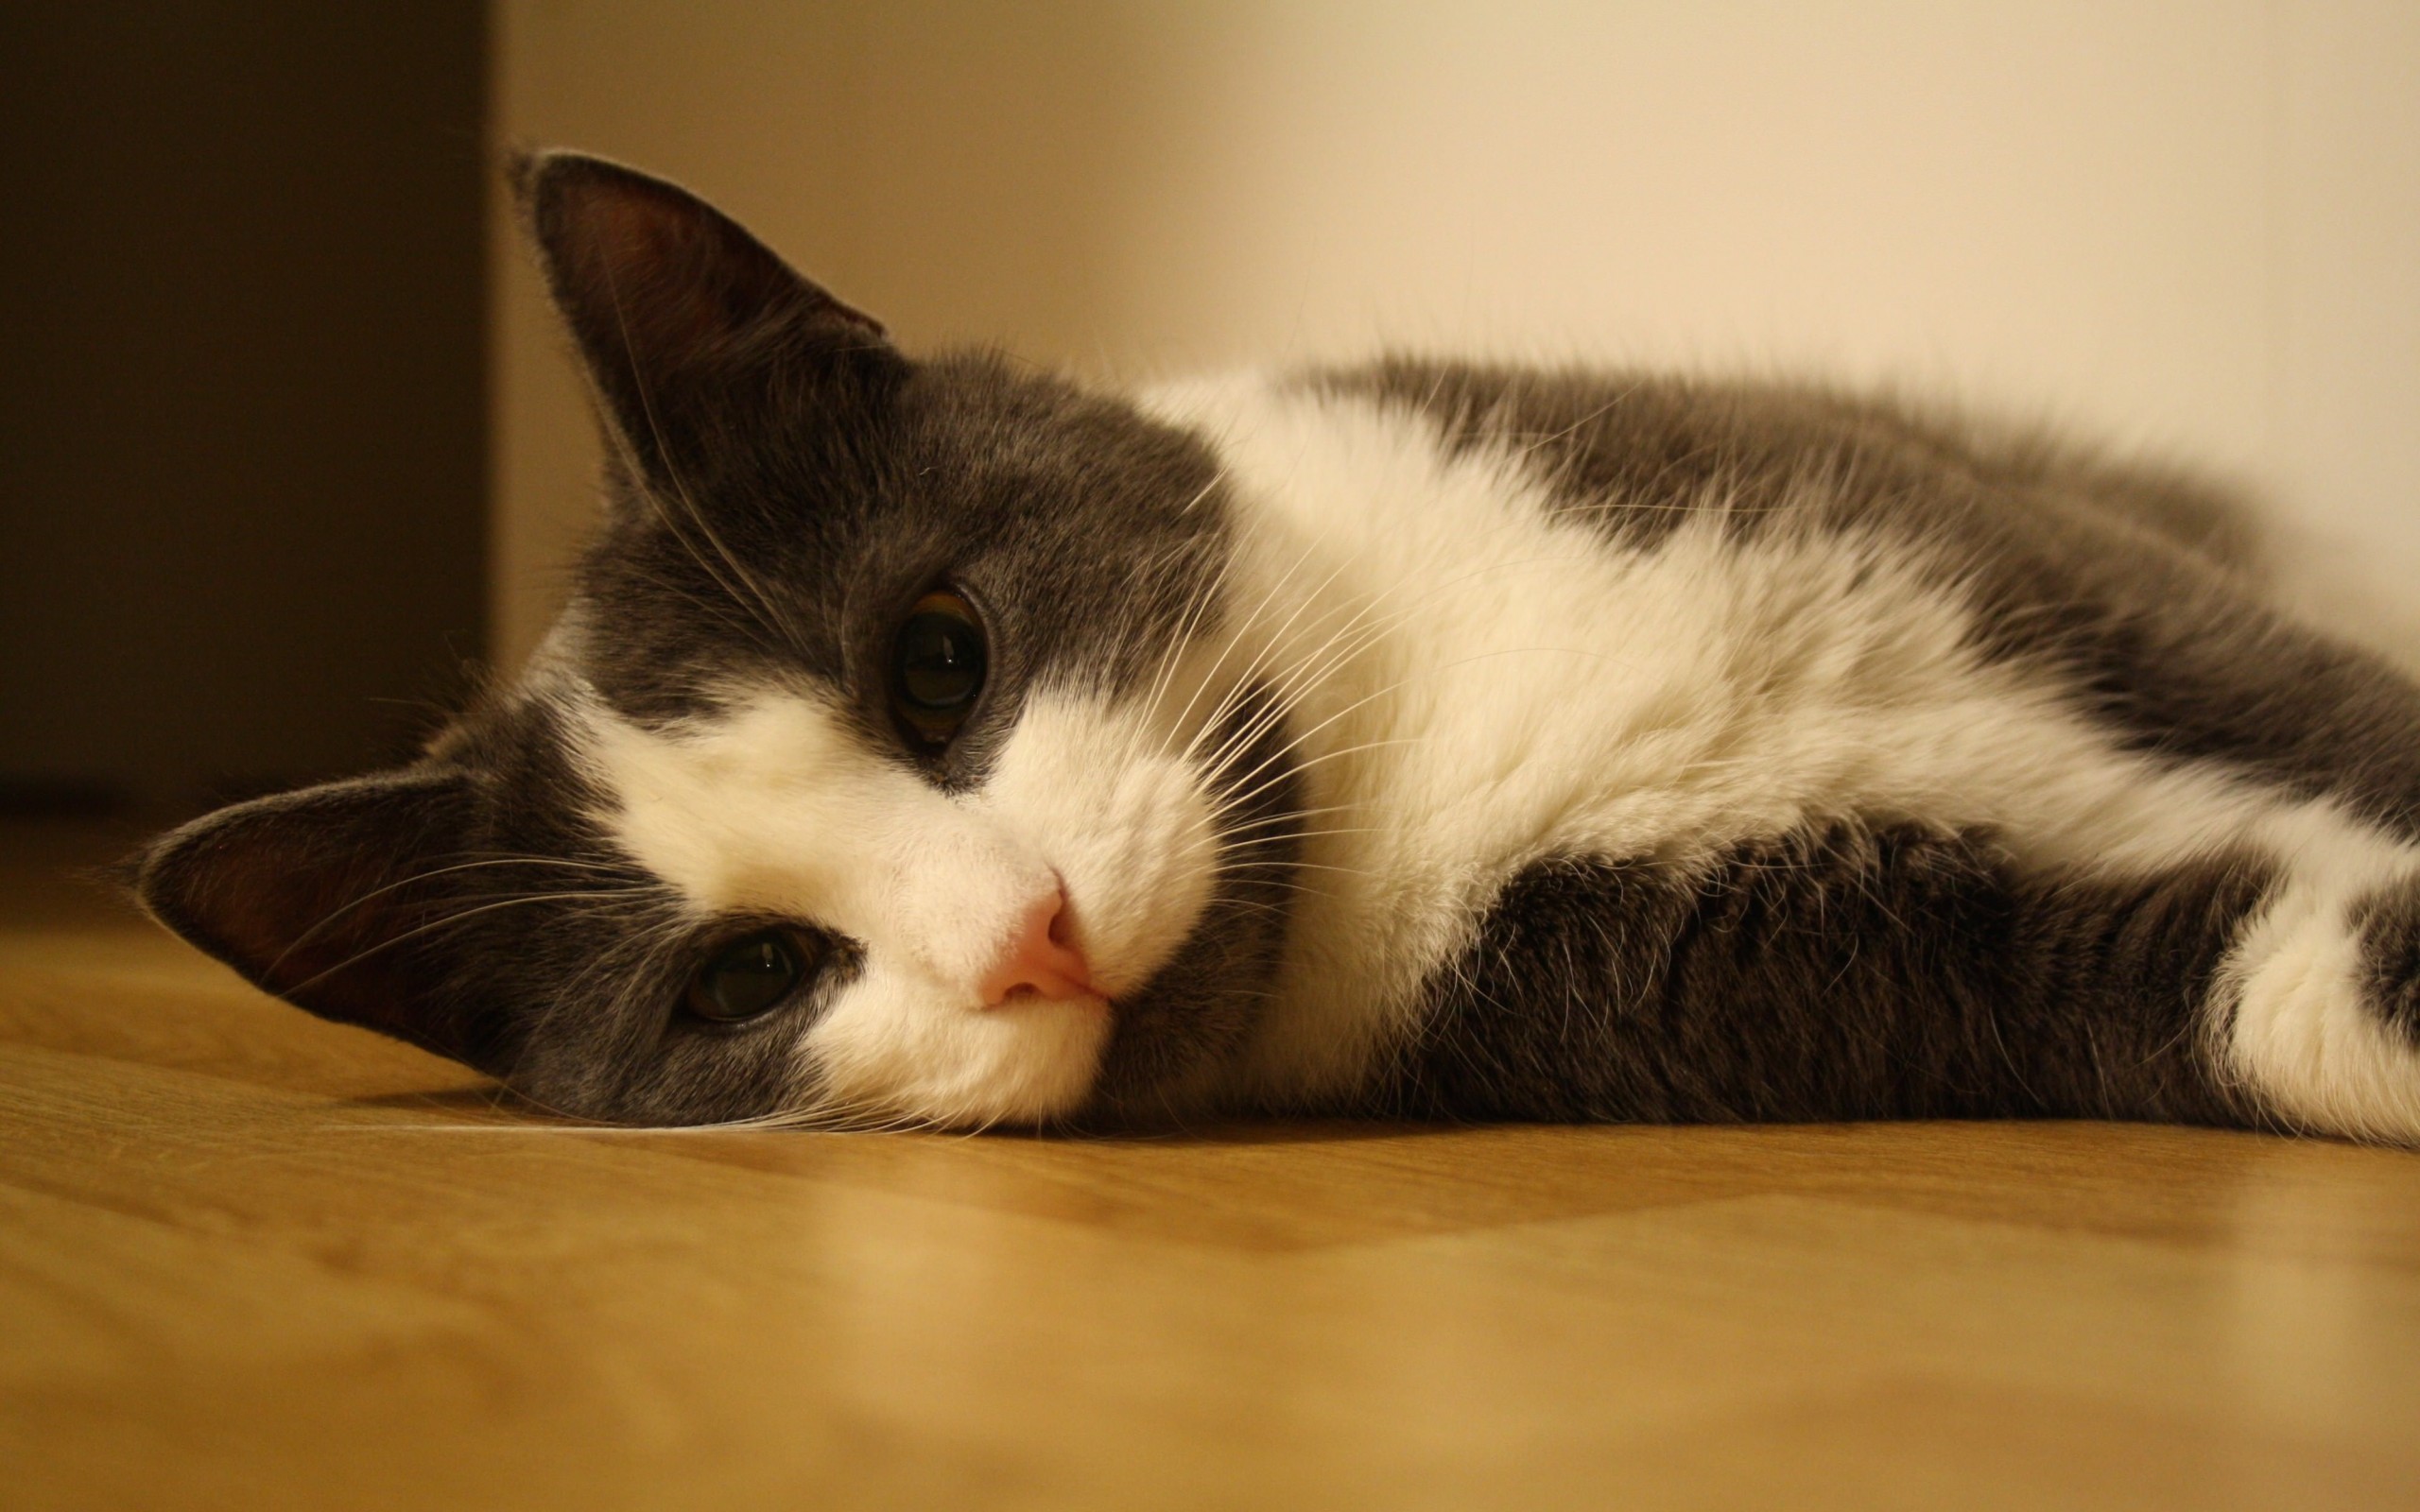 Sweet Cat Lying On The Floor Wallpaper for Desktop 2560x1600